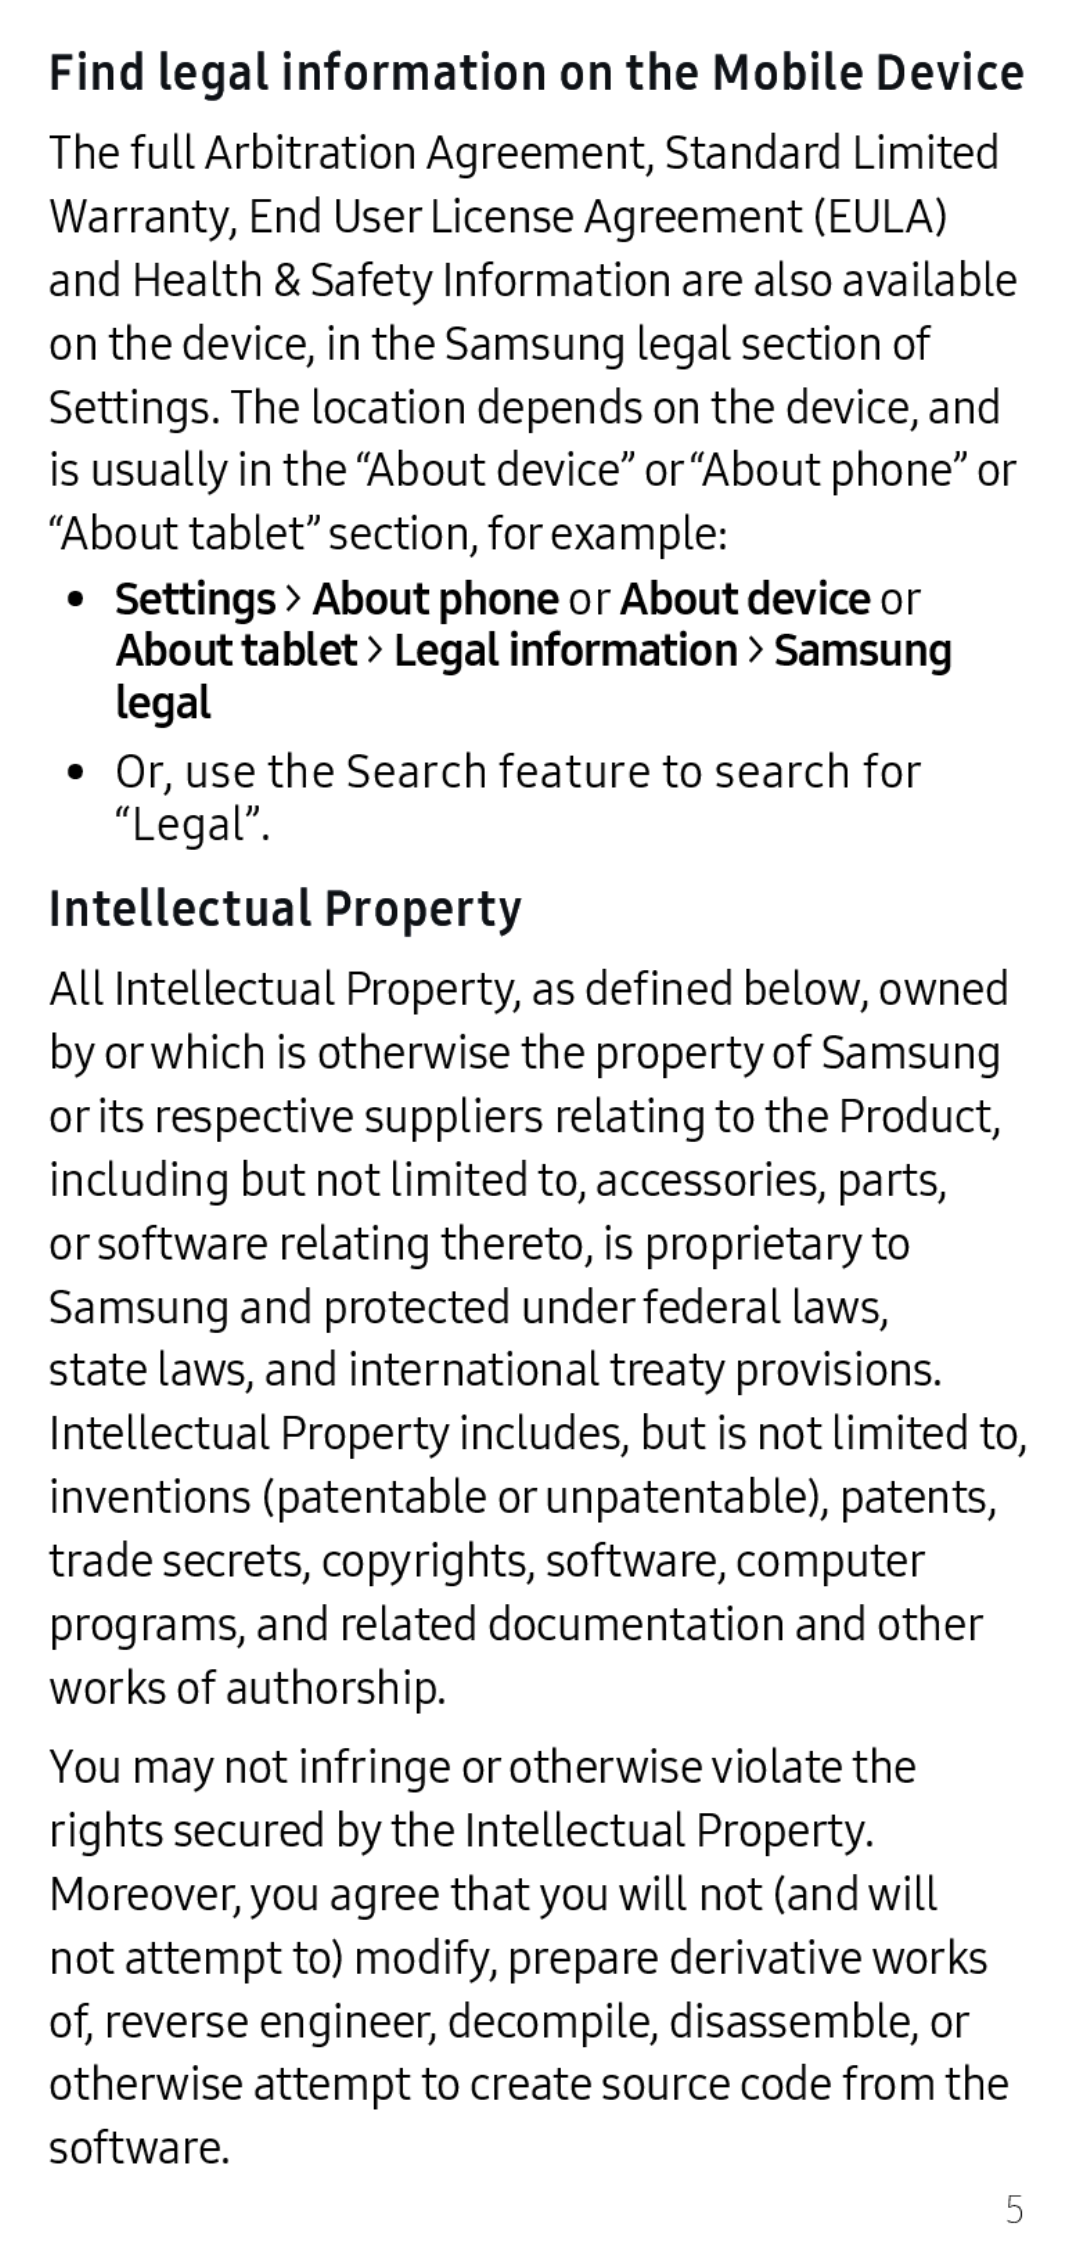 Intellectual Property Galaxy S10e Spectrum Mobile